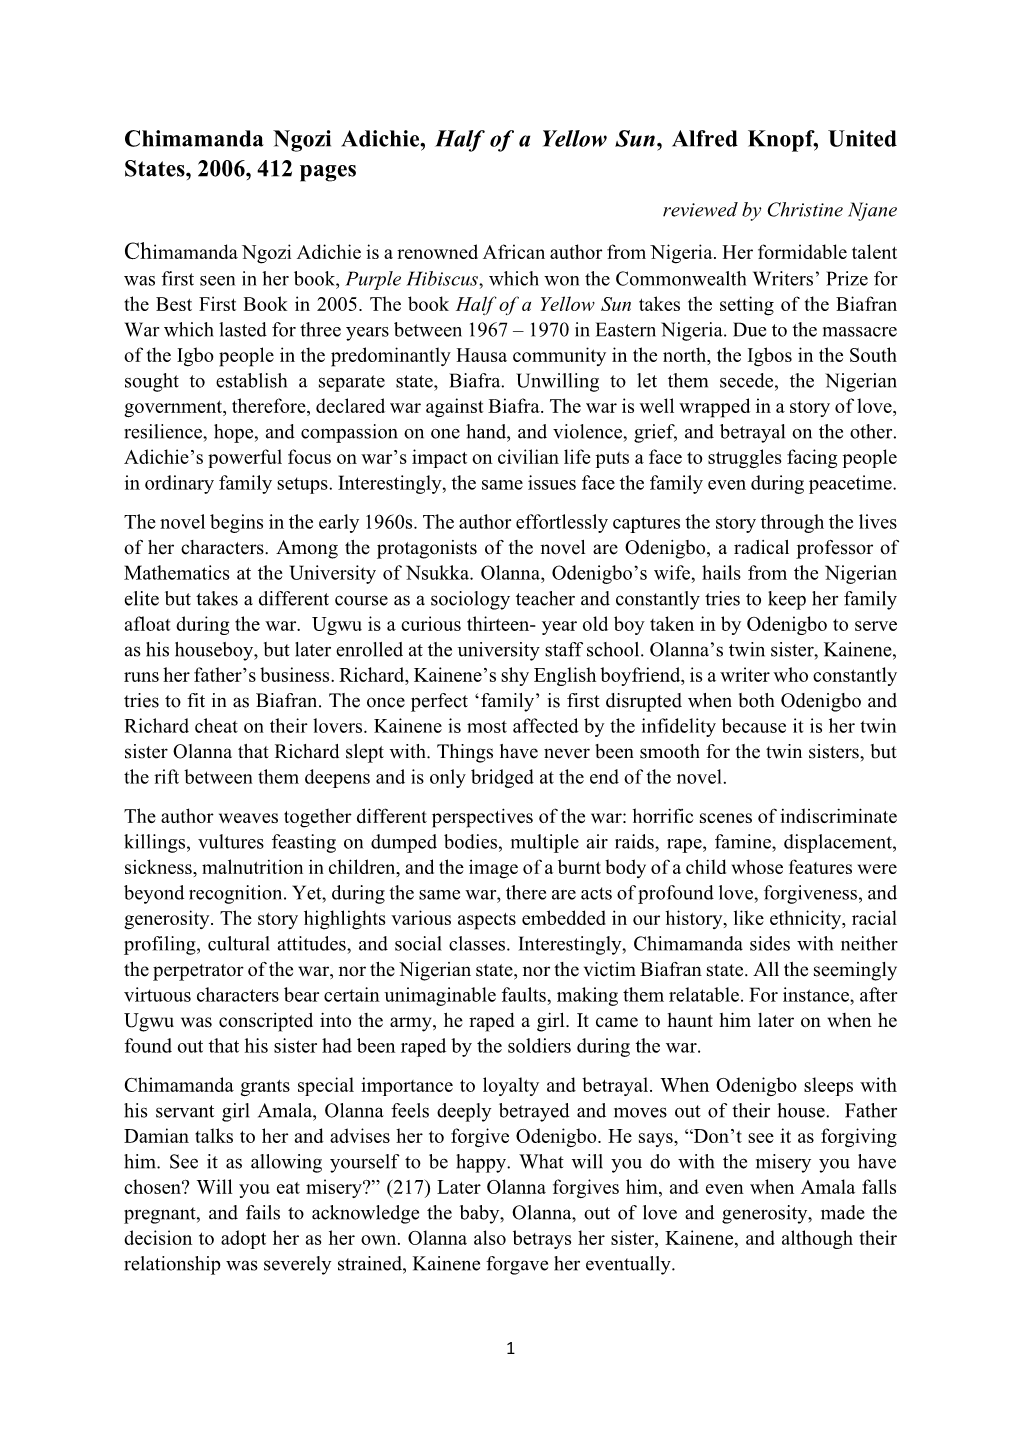 Chimamanda Ngozi Adichie, Half of a Yellow Sun, Alfred Knopf, United States, 2006, 412 Pages Reviewed by Christine Njane